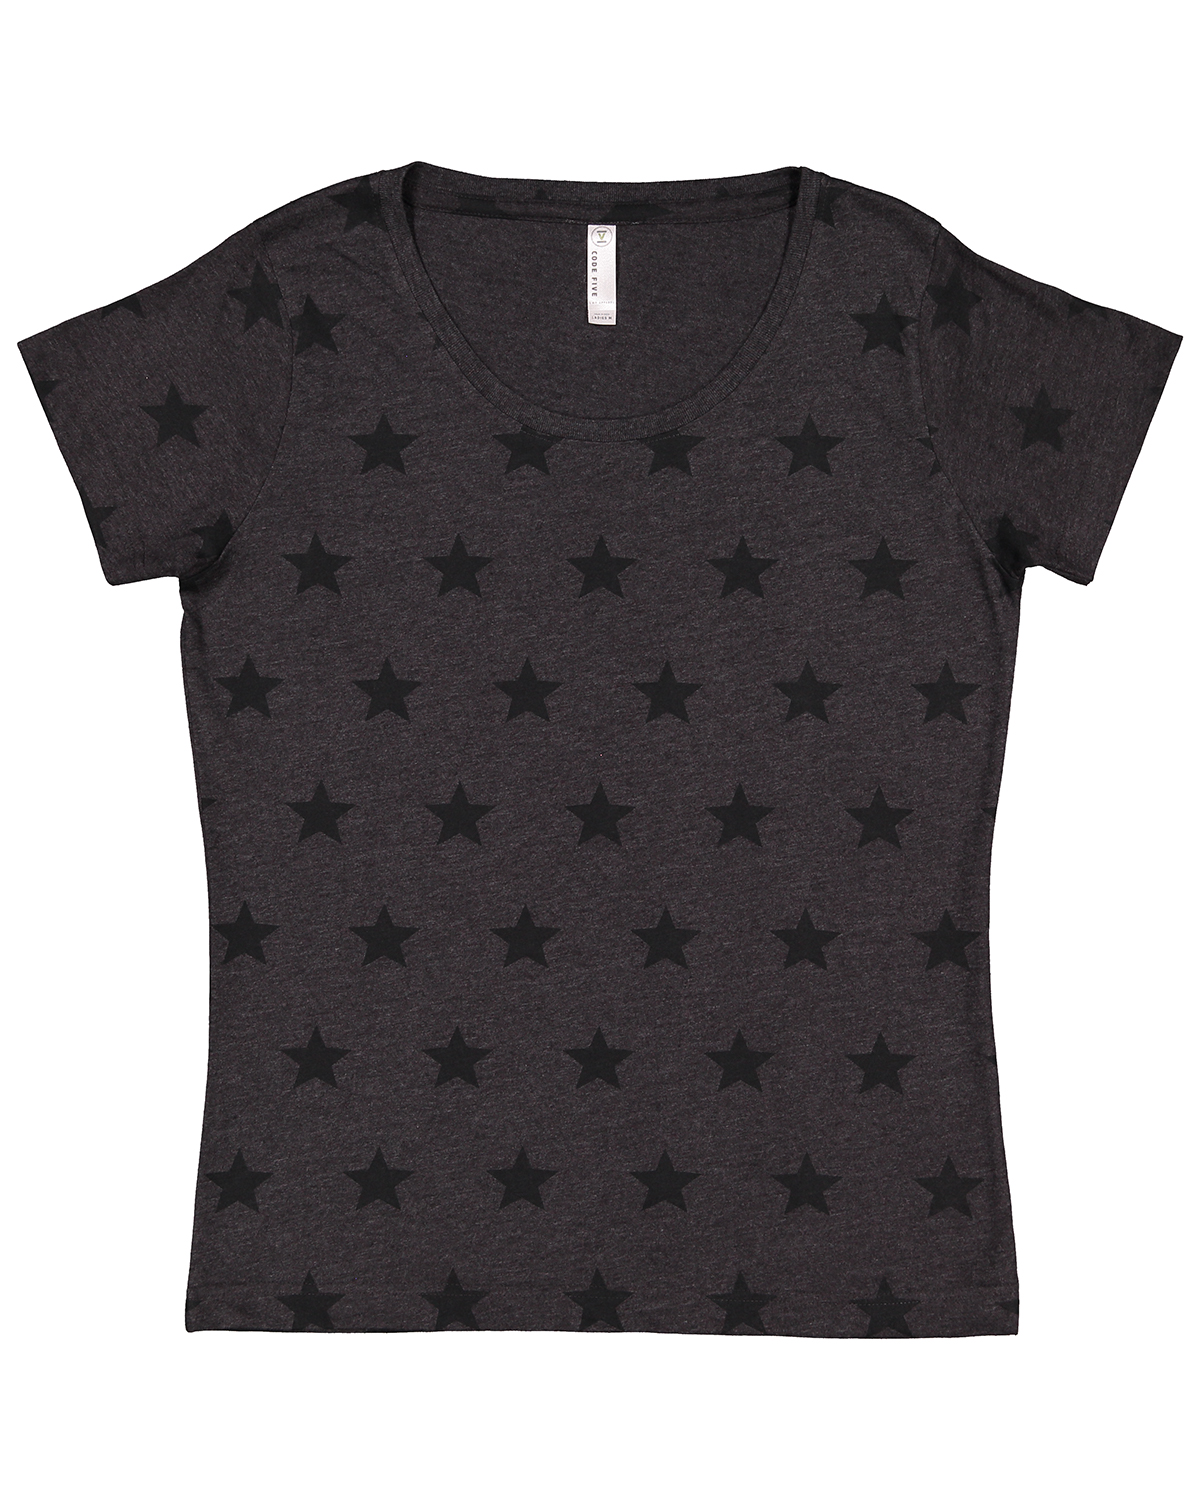 Code Five (So) 3929 Unisex Star Print T Shirt | Jiffy Shirts